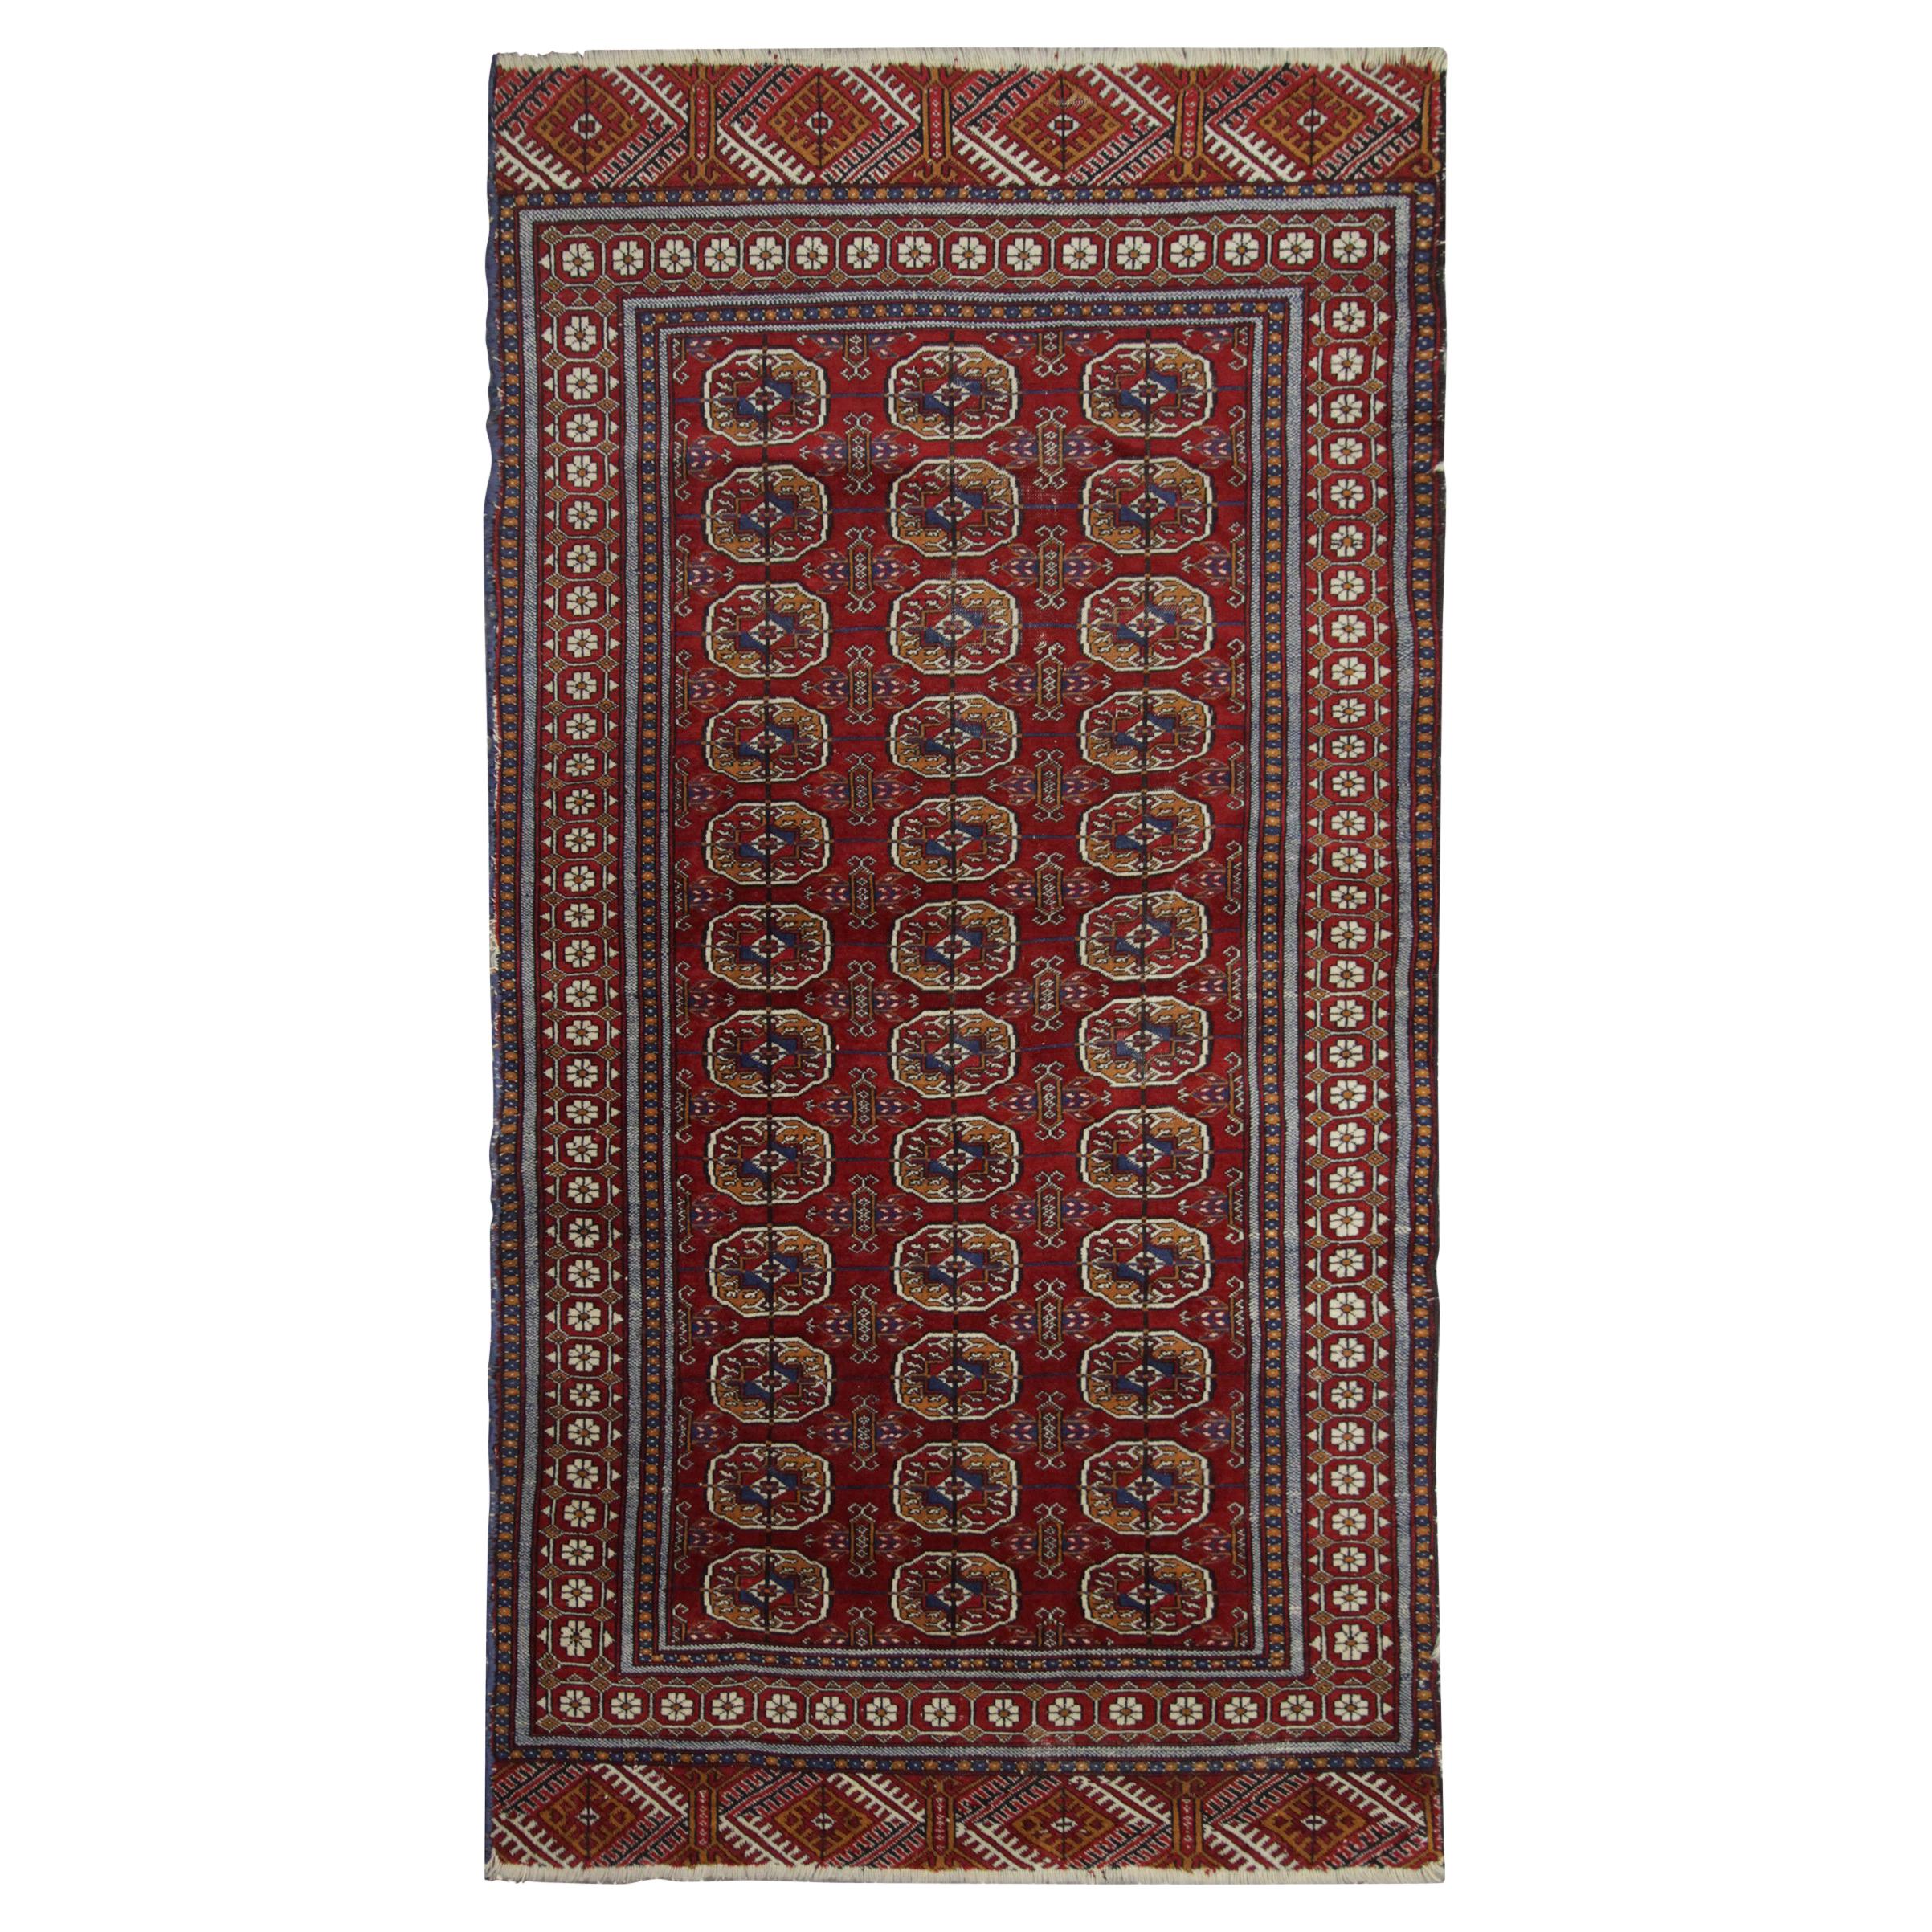 Antique Rugs Bukhara Area Rug Handwoven Red Wool Oriental Carpet